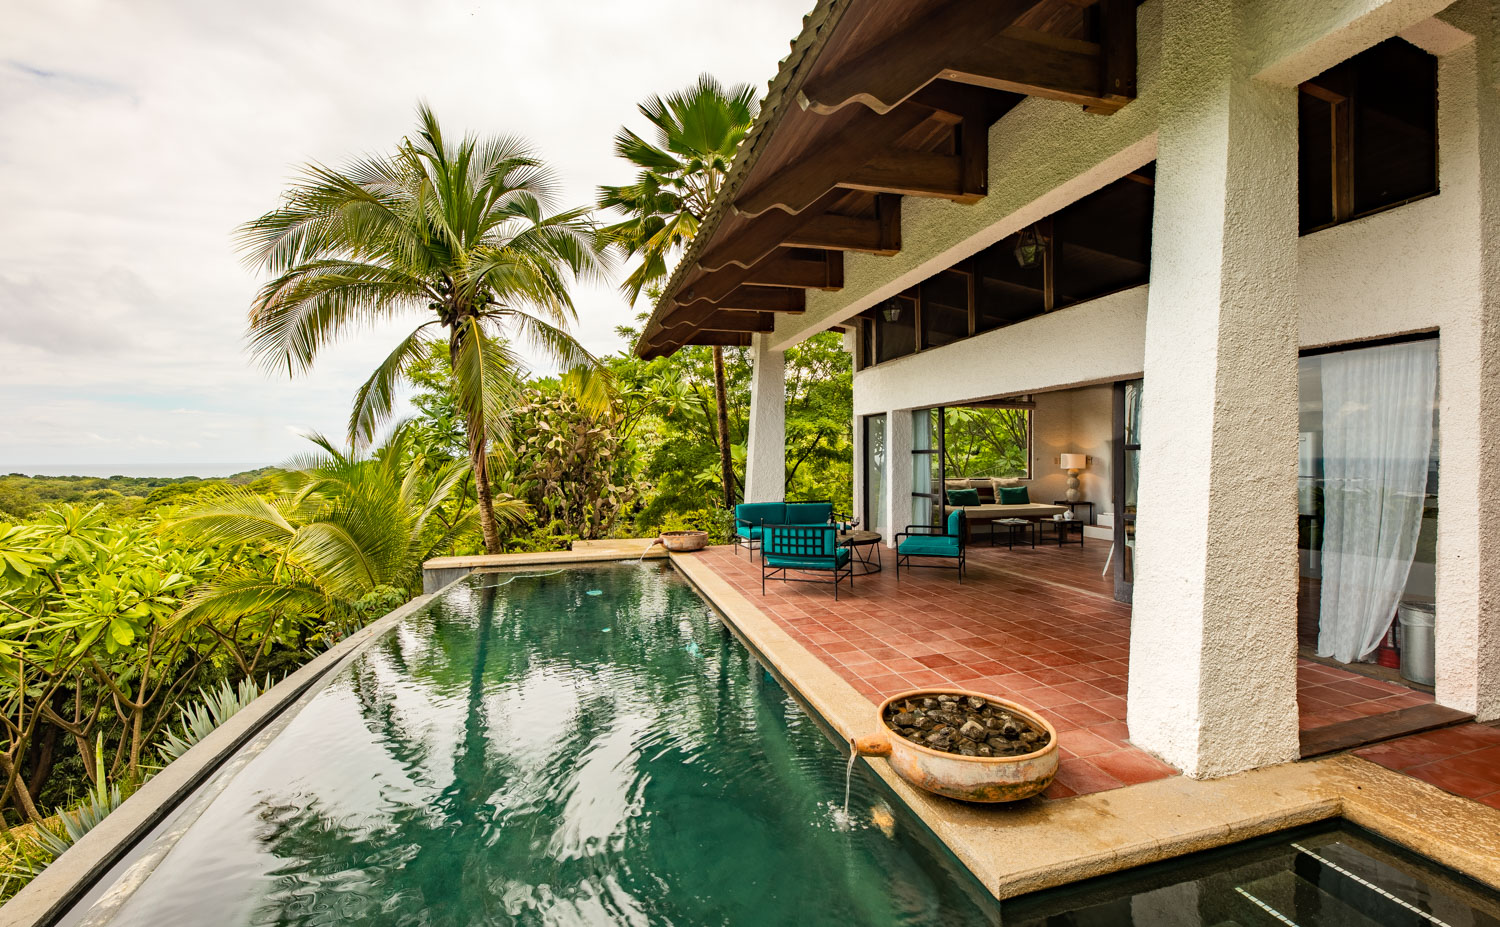 Casa-Harmony-Wanderlust-Realty-Real-Estate-Rentals-Nosara-Costa-Rica-3.jpg